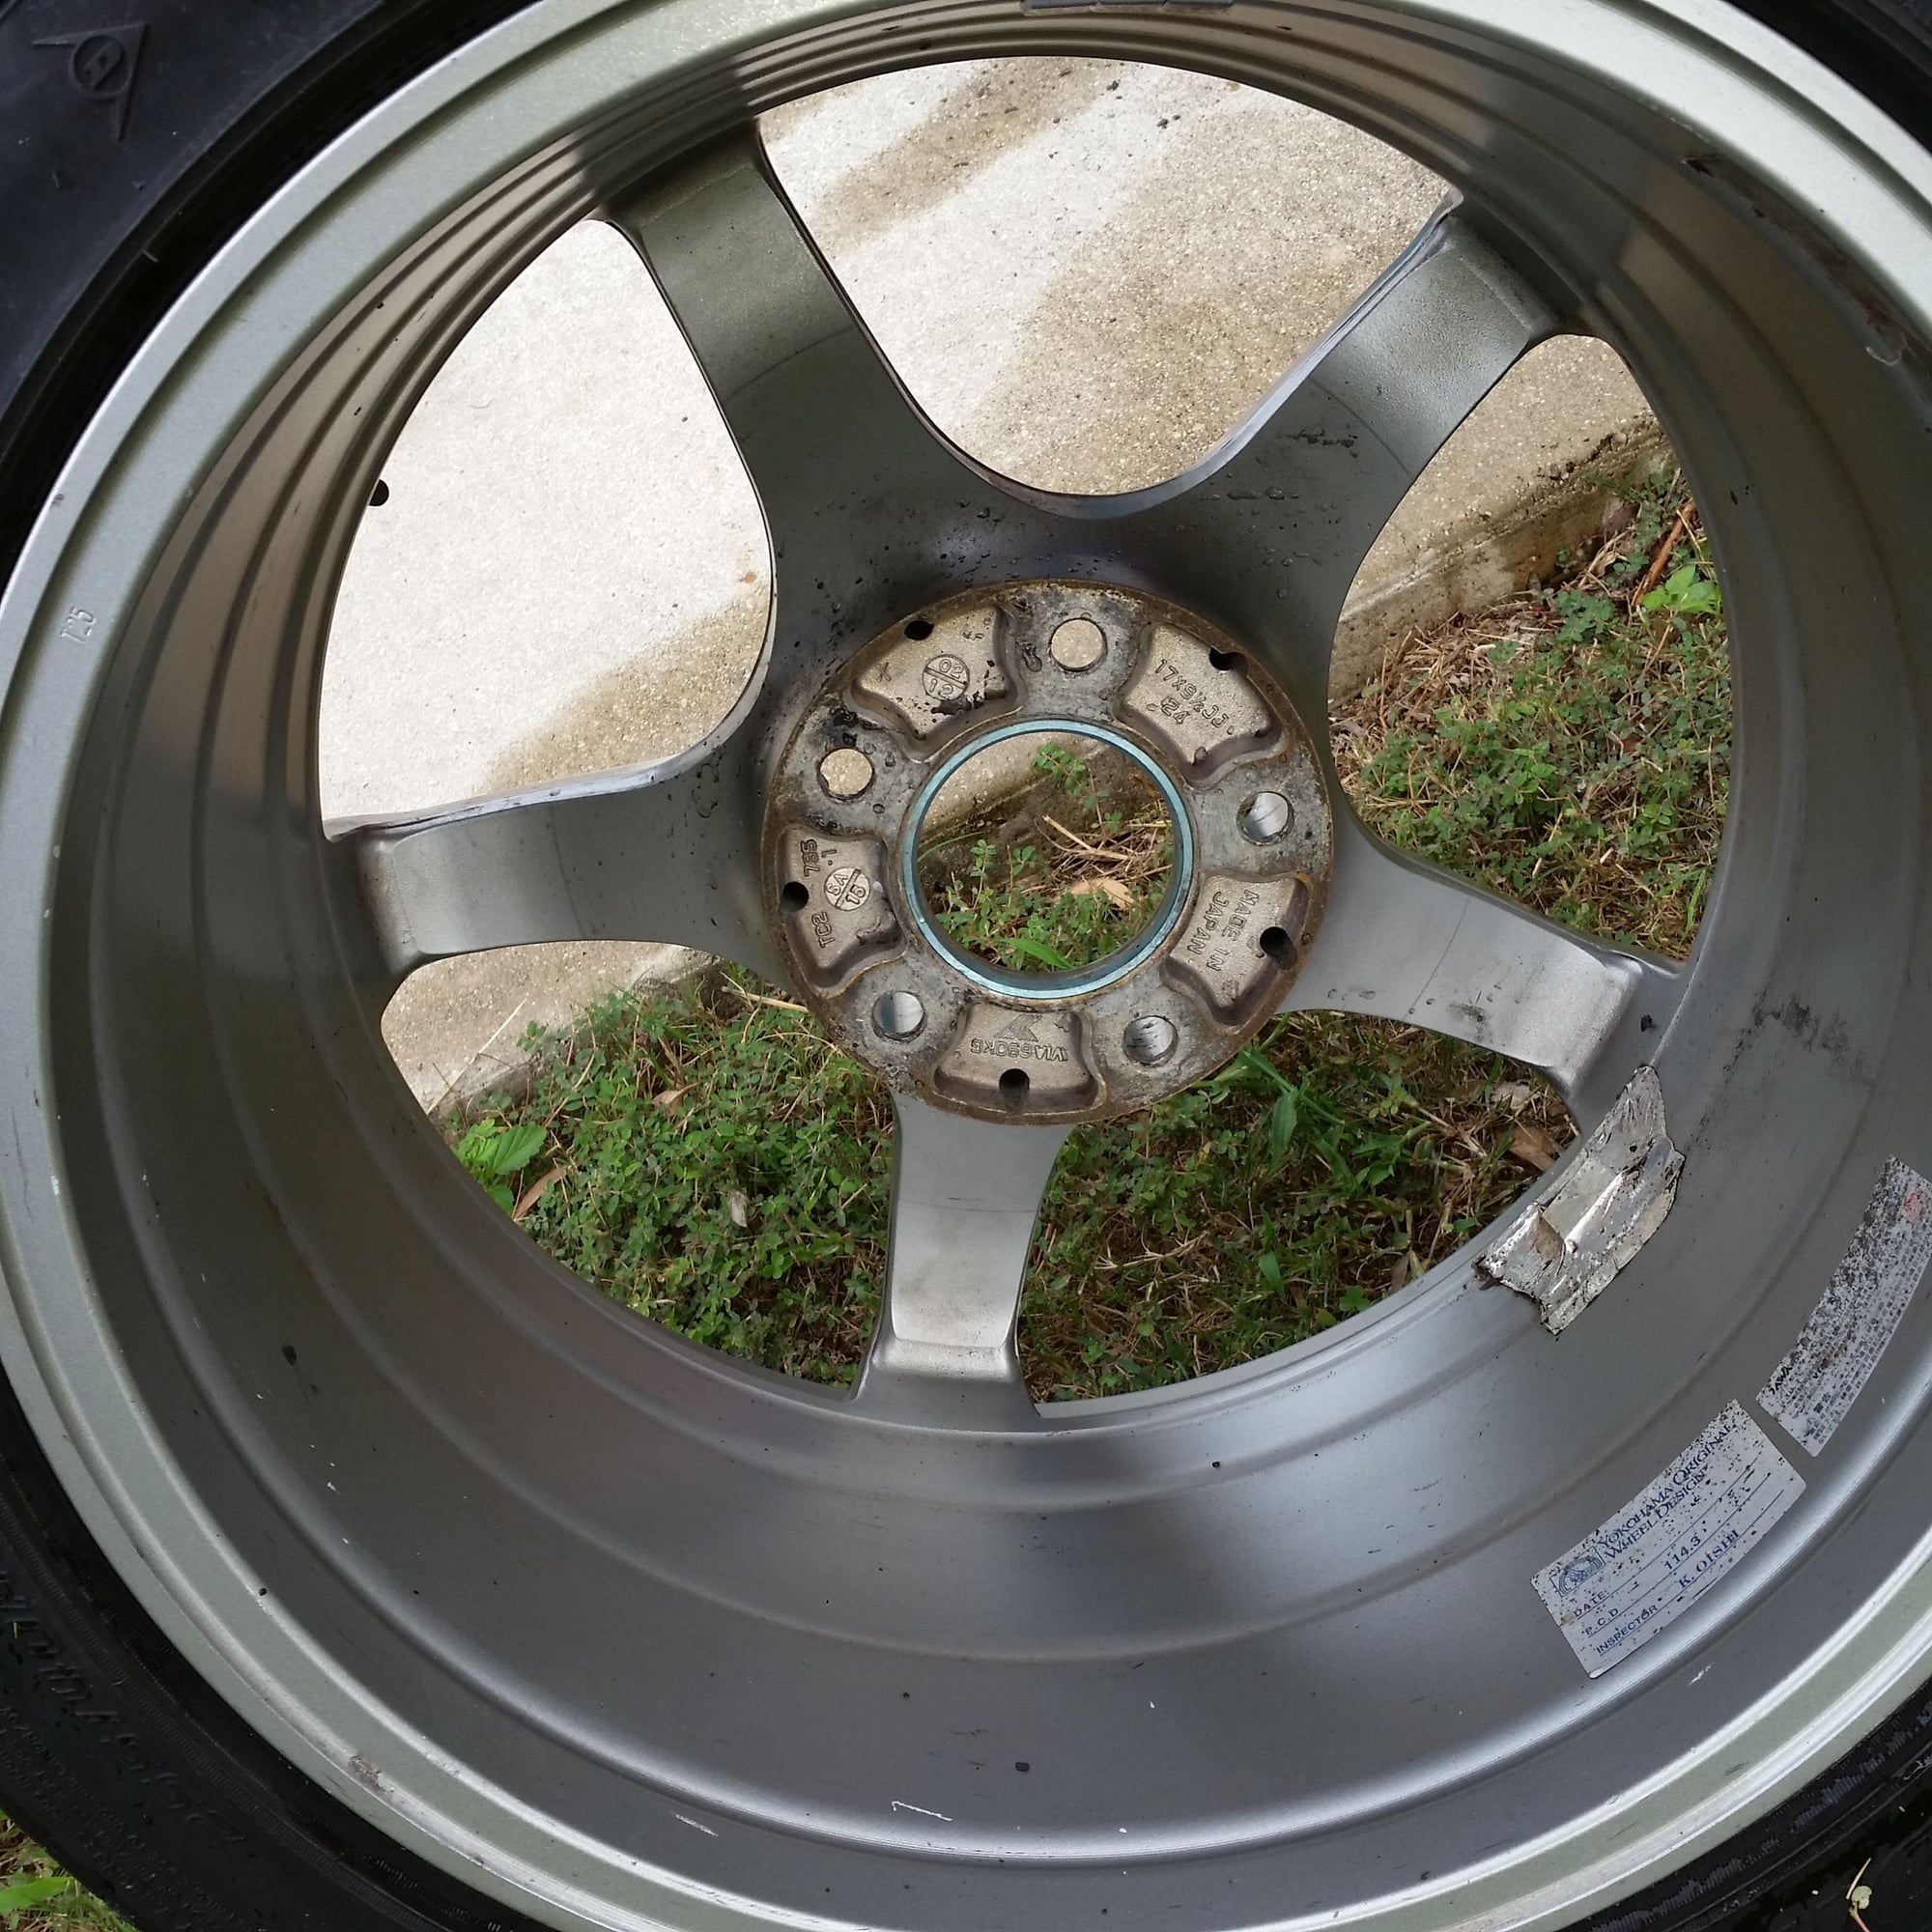 Wheels and Tires/Axles - 17x9.5 +24 Advan TC-II - Used - 2003 to 2015 Mitsubishi Lancer Evolution - San Antonio, TX 78222, United States